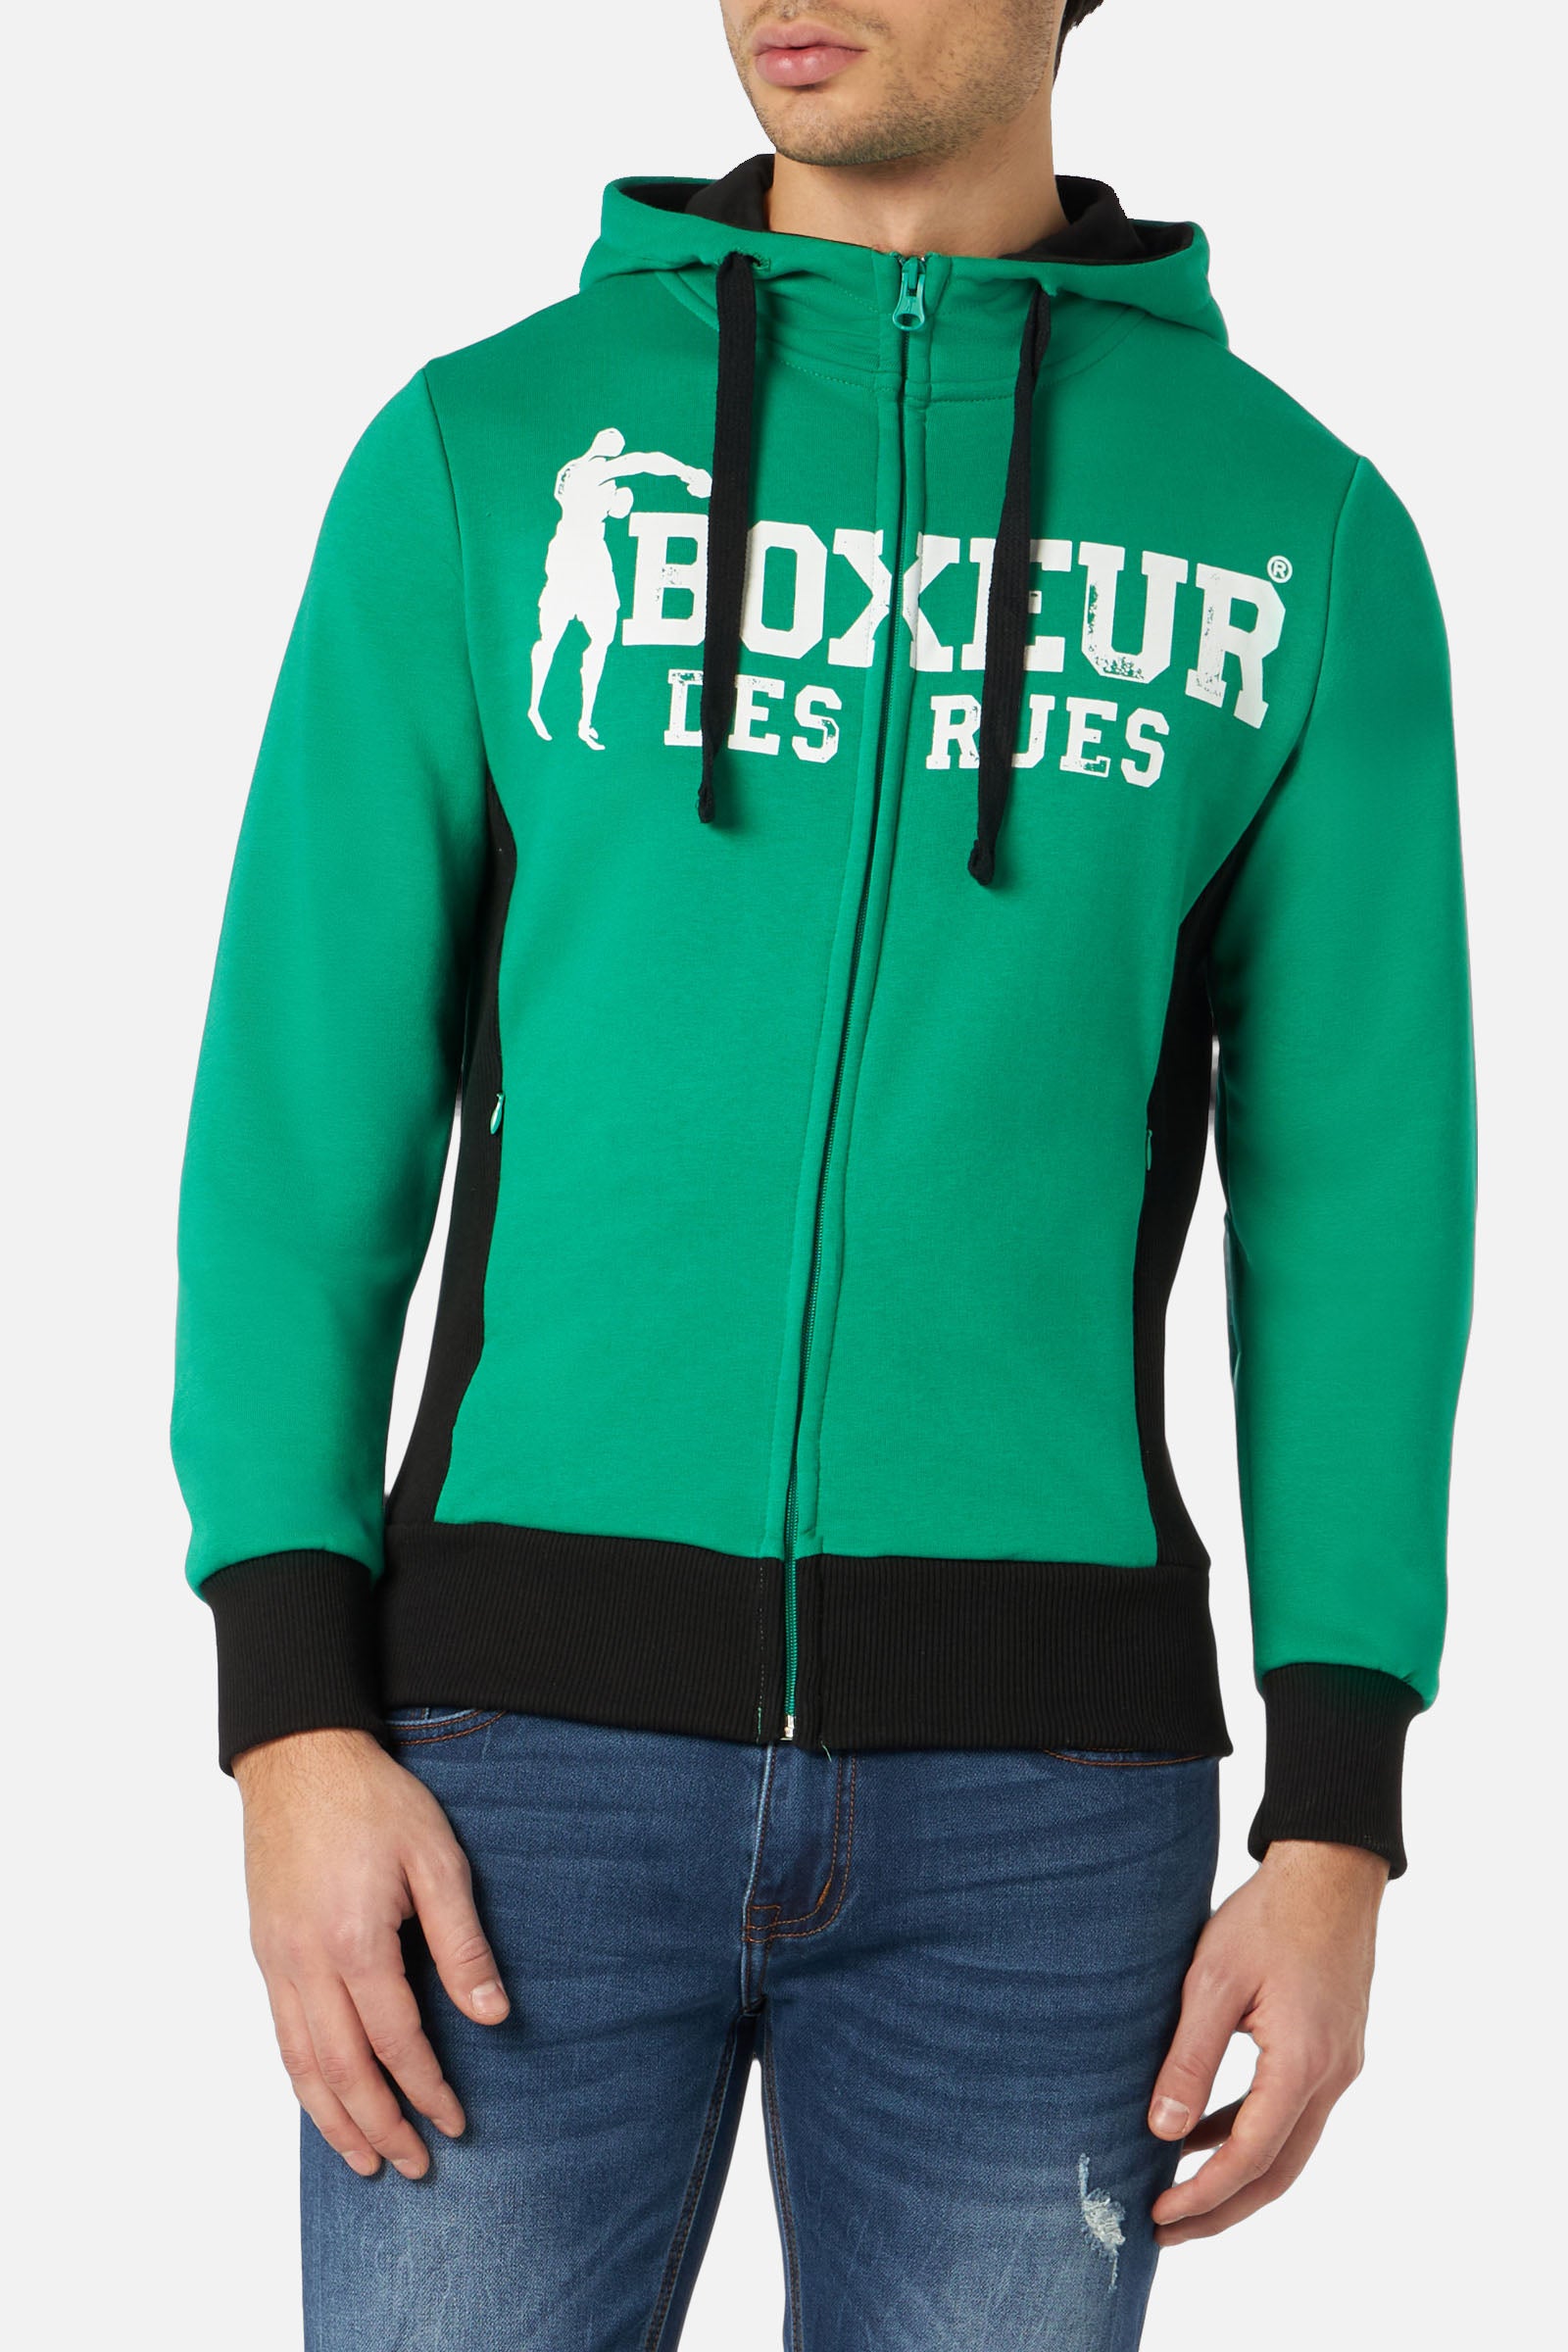 Hooded Full Zip Sweatshirt in Green Sweatjacken Boxeur des Rues   